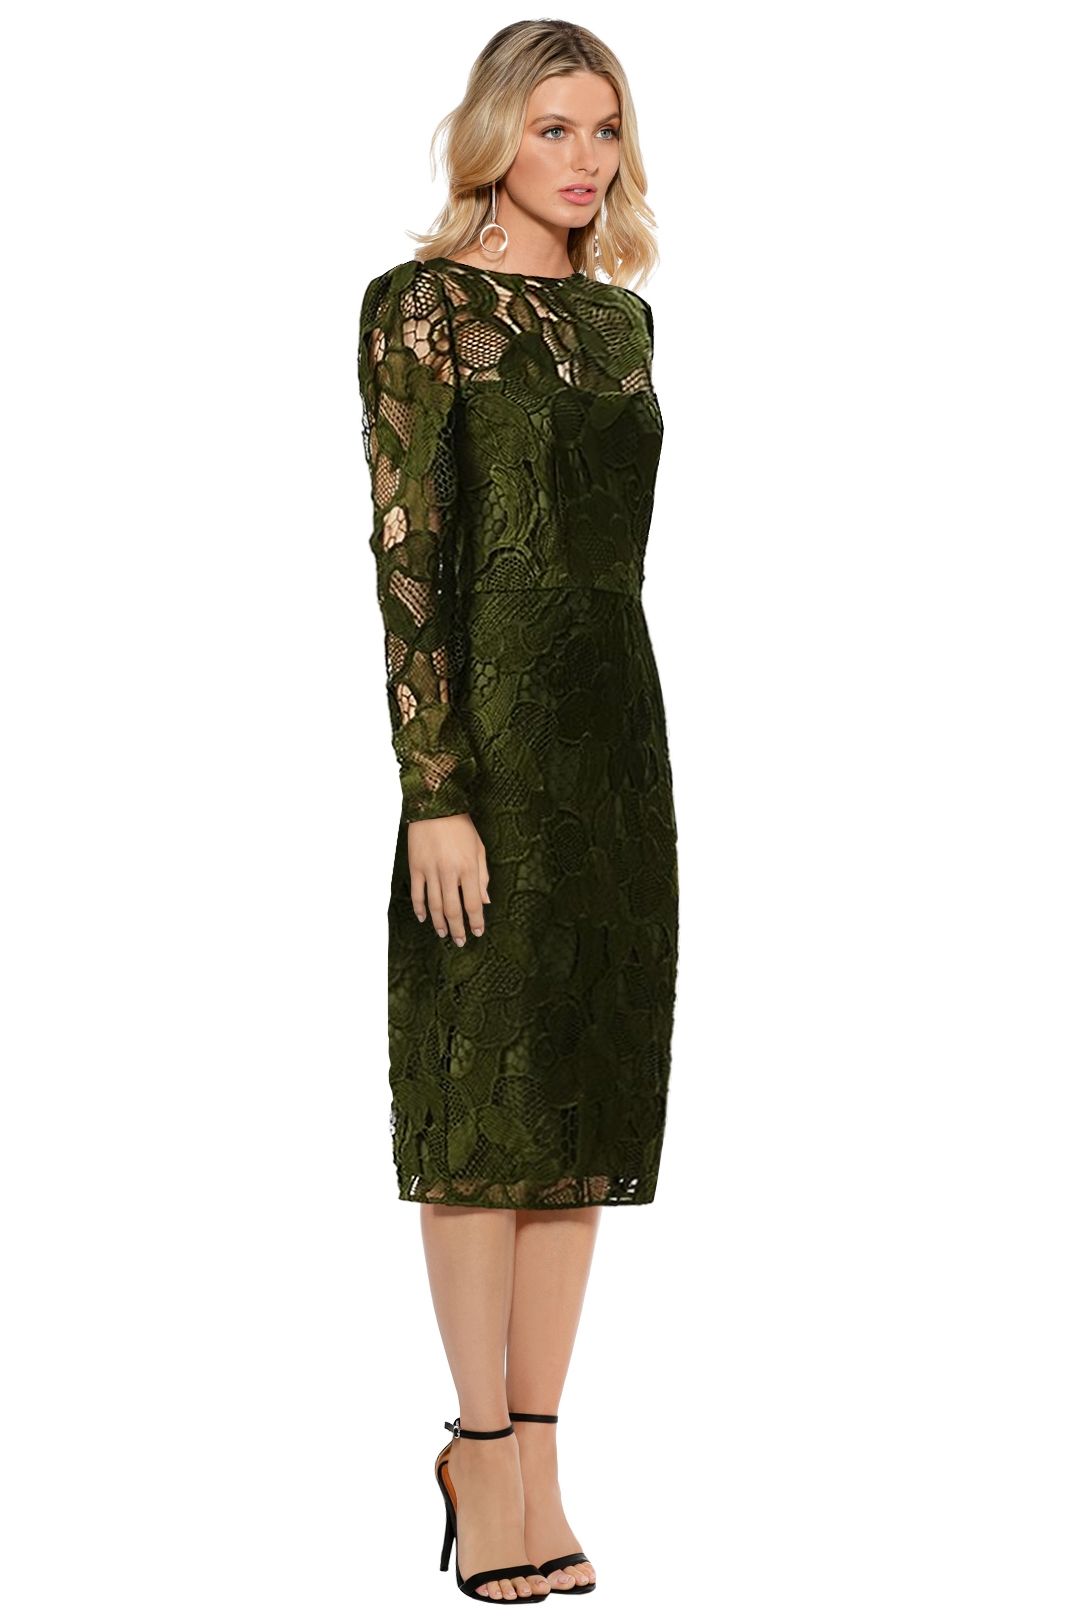 Cooper St - Cast Away Lace Dress - Dark Green - Side